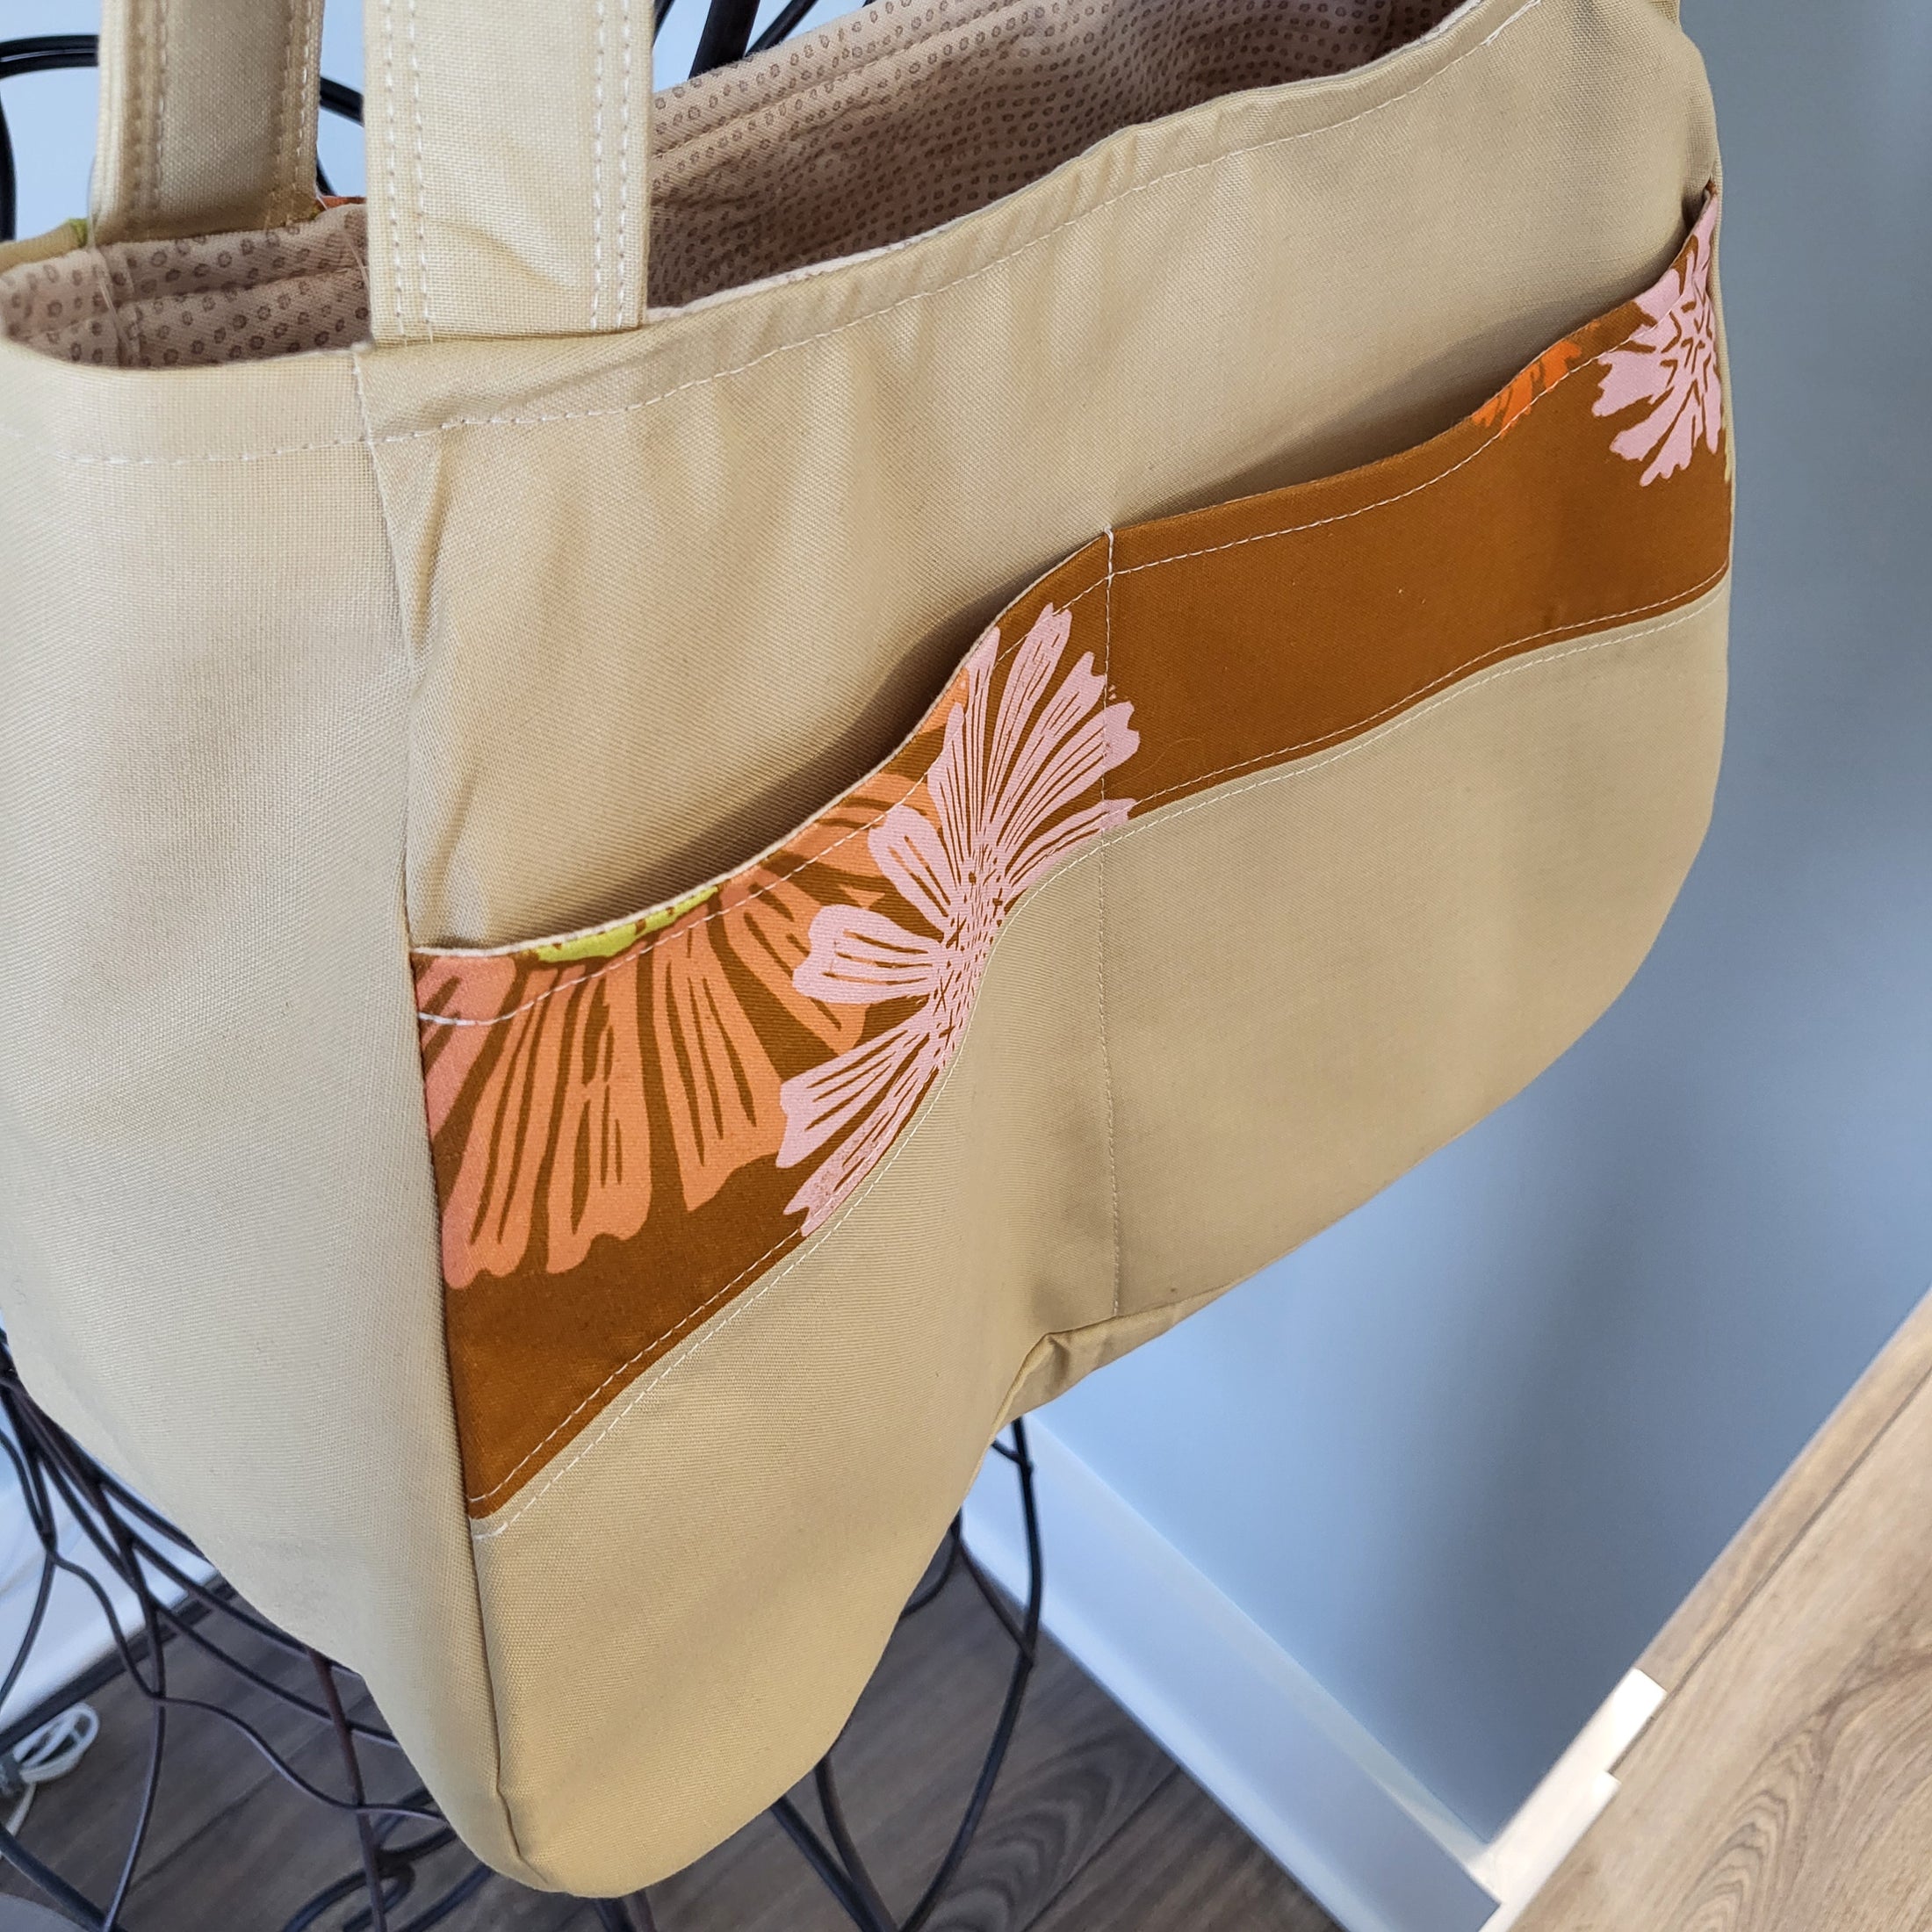 Let the sunshine in exterior pockets tote bag.